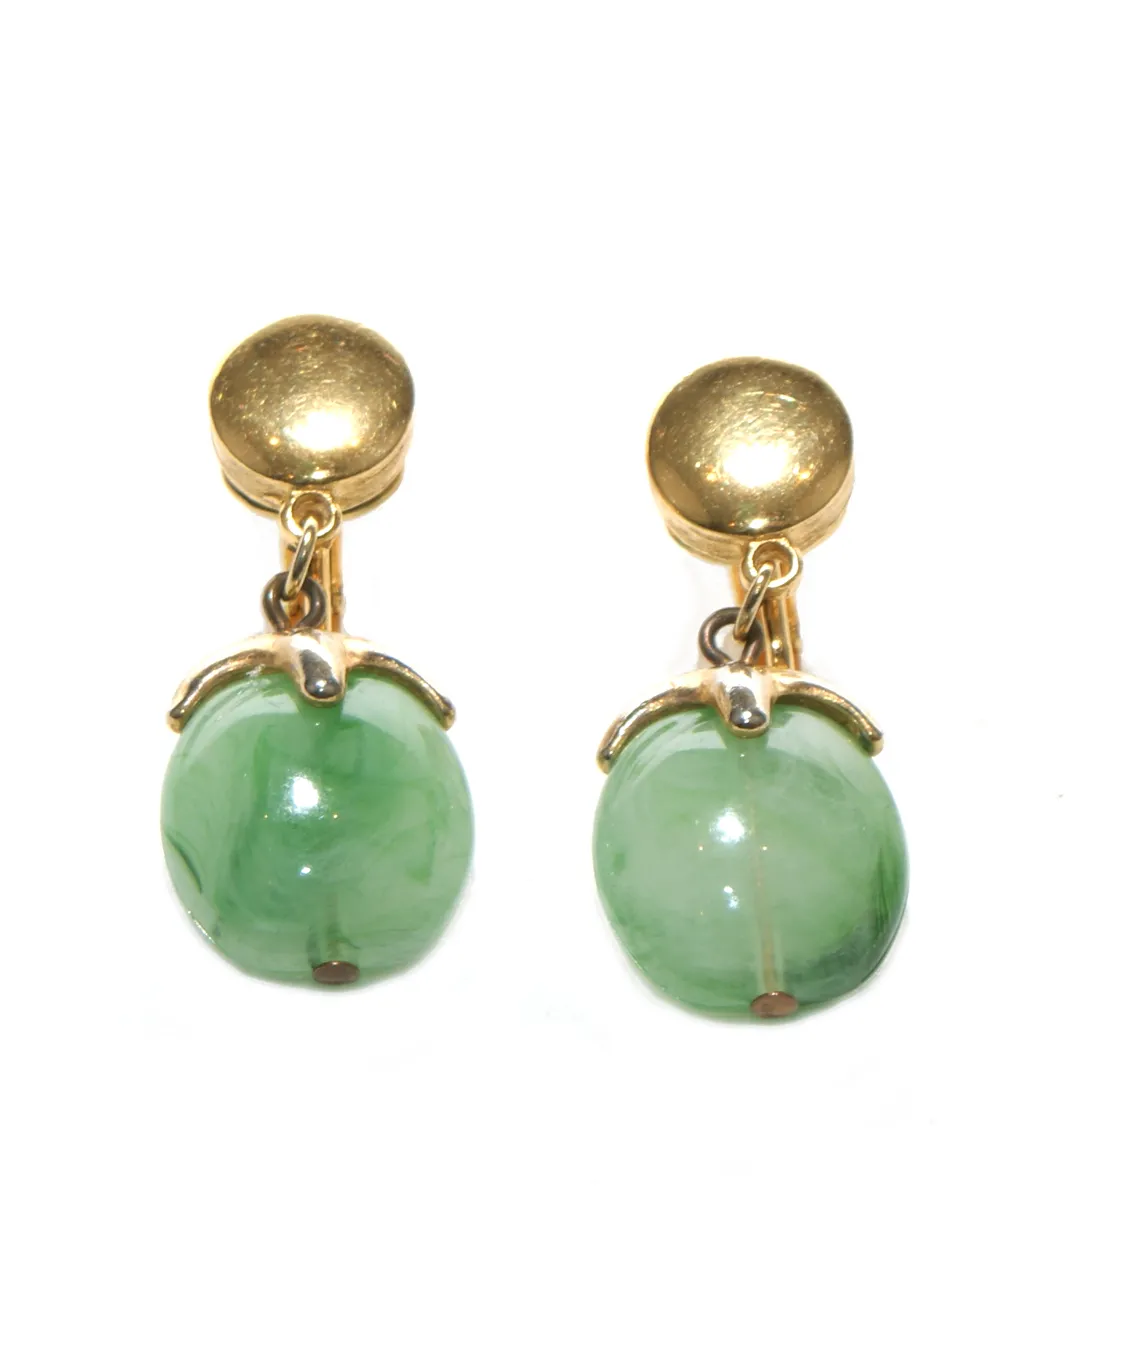 Trifari crown earrings green and gold